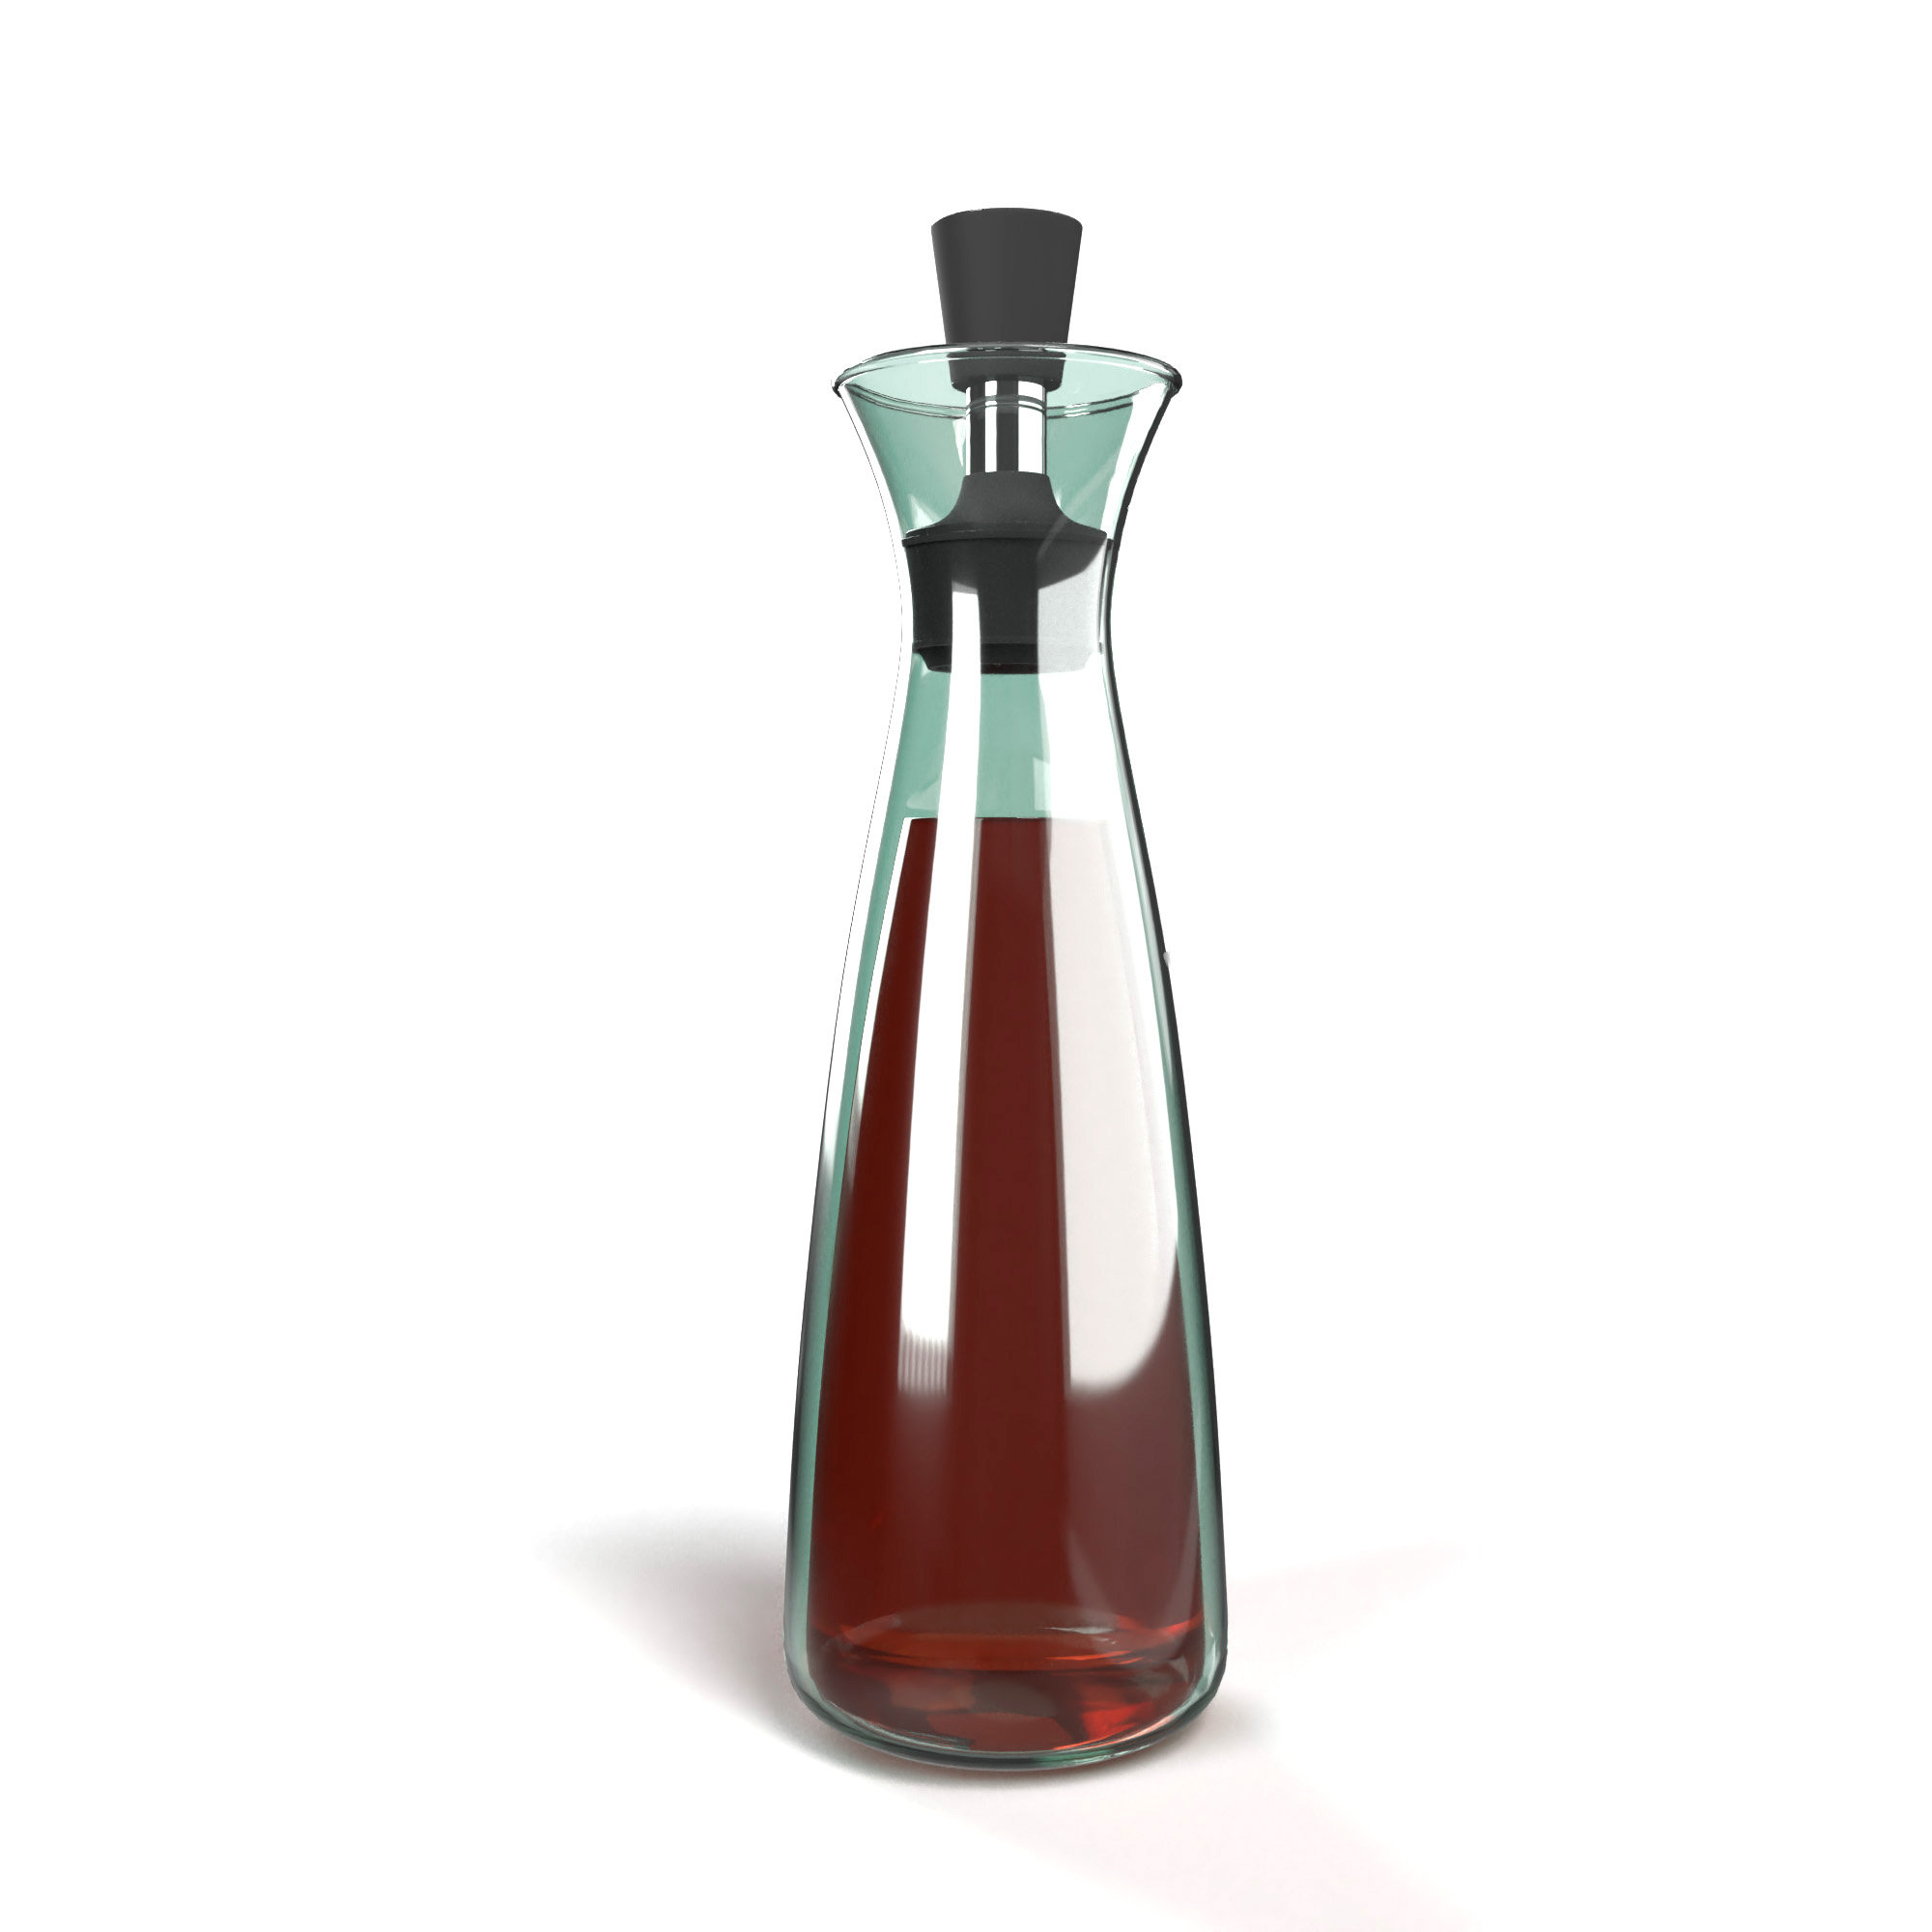 JoyJolt Hali 35 fl. oz. Clear Glass 3-Carafe Bottle Pitcher with 6